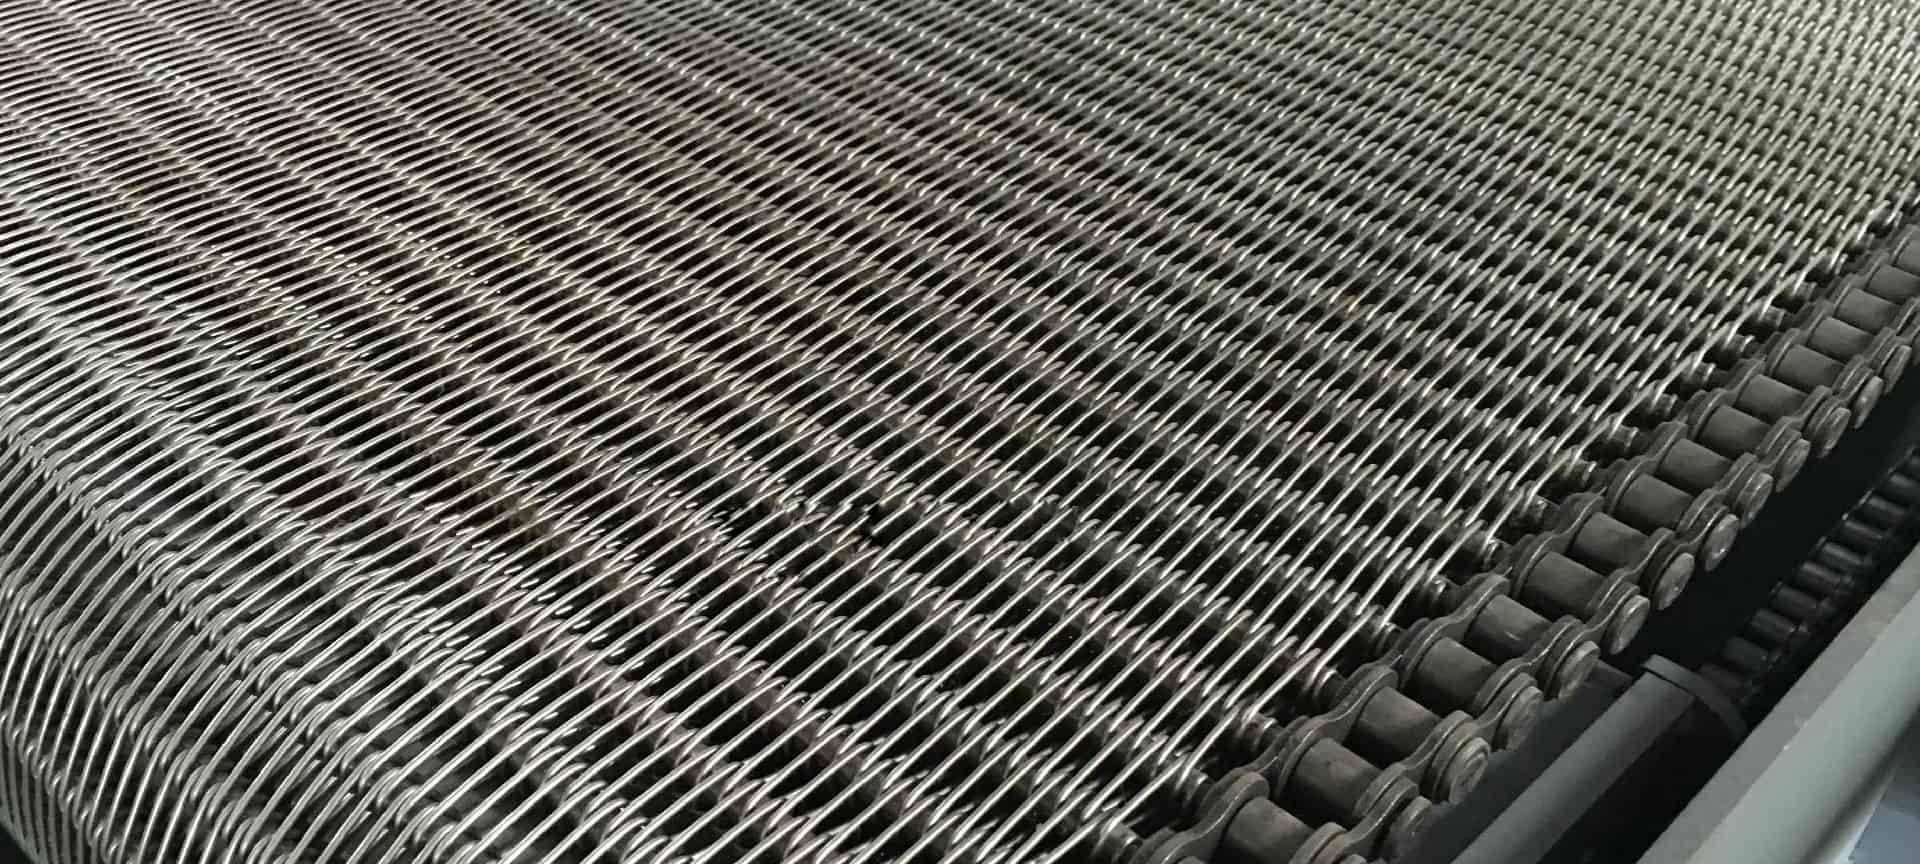 Conveyor Belt Wire highest quality standards